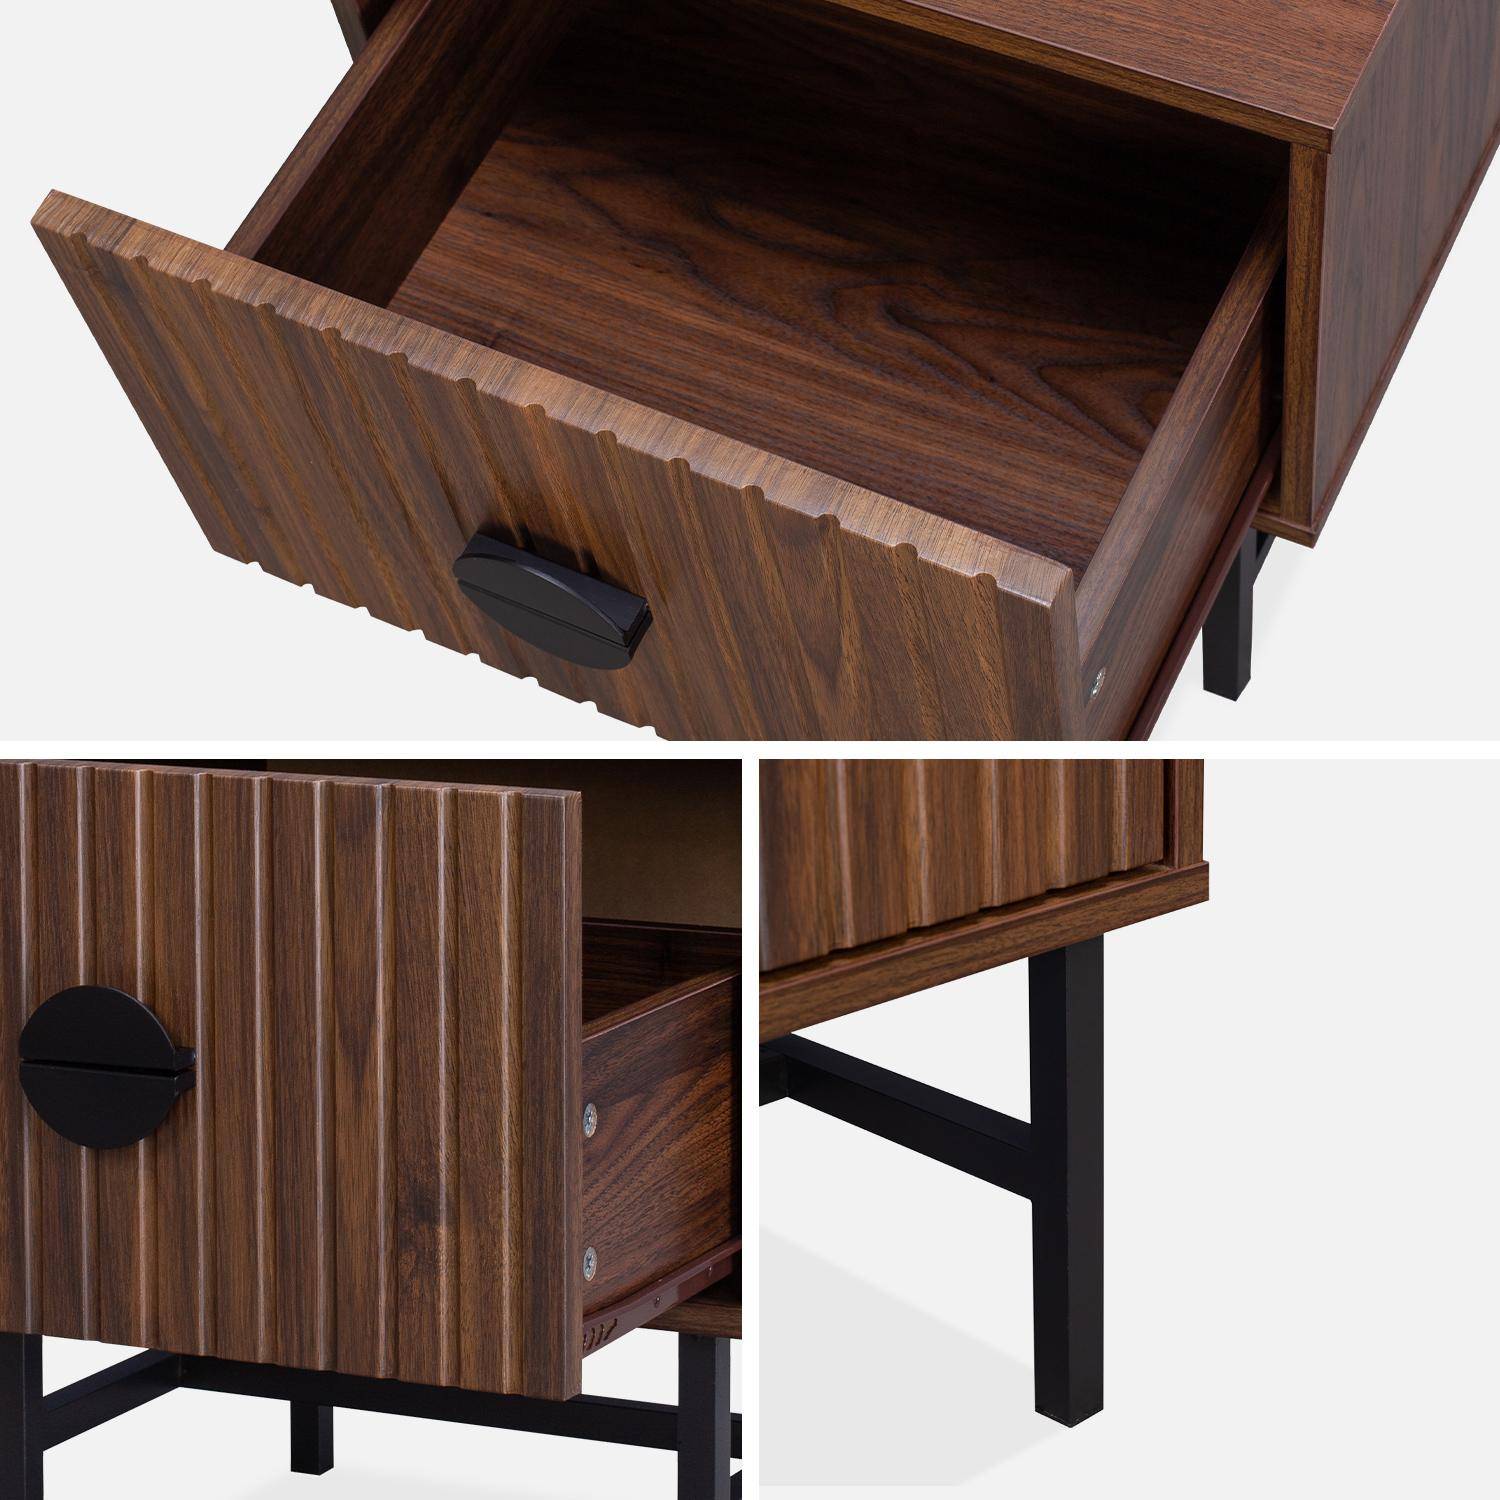 Set of 2 dark wood effect bedside tables, one drawer, L 48 x W 39 x H 50cm Photo7